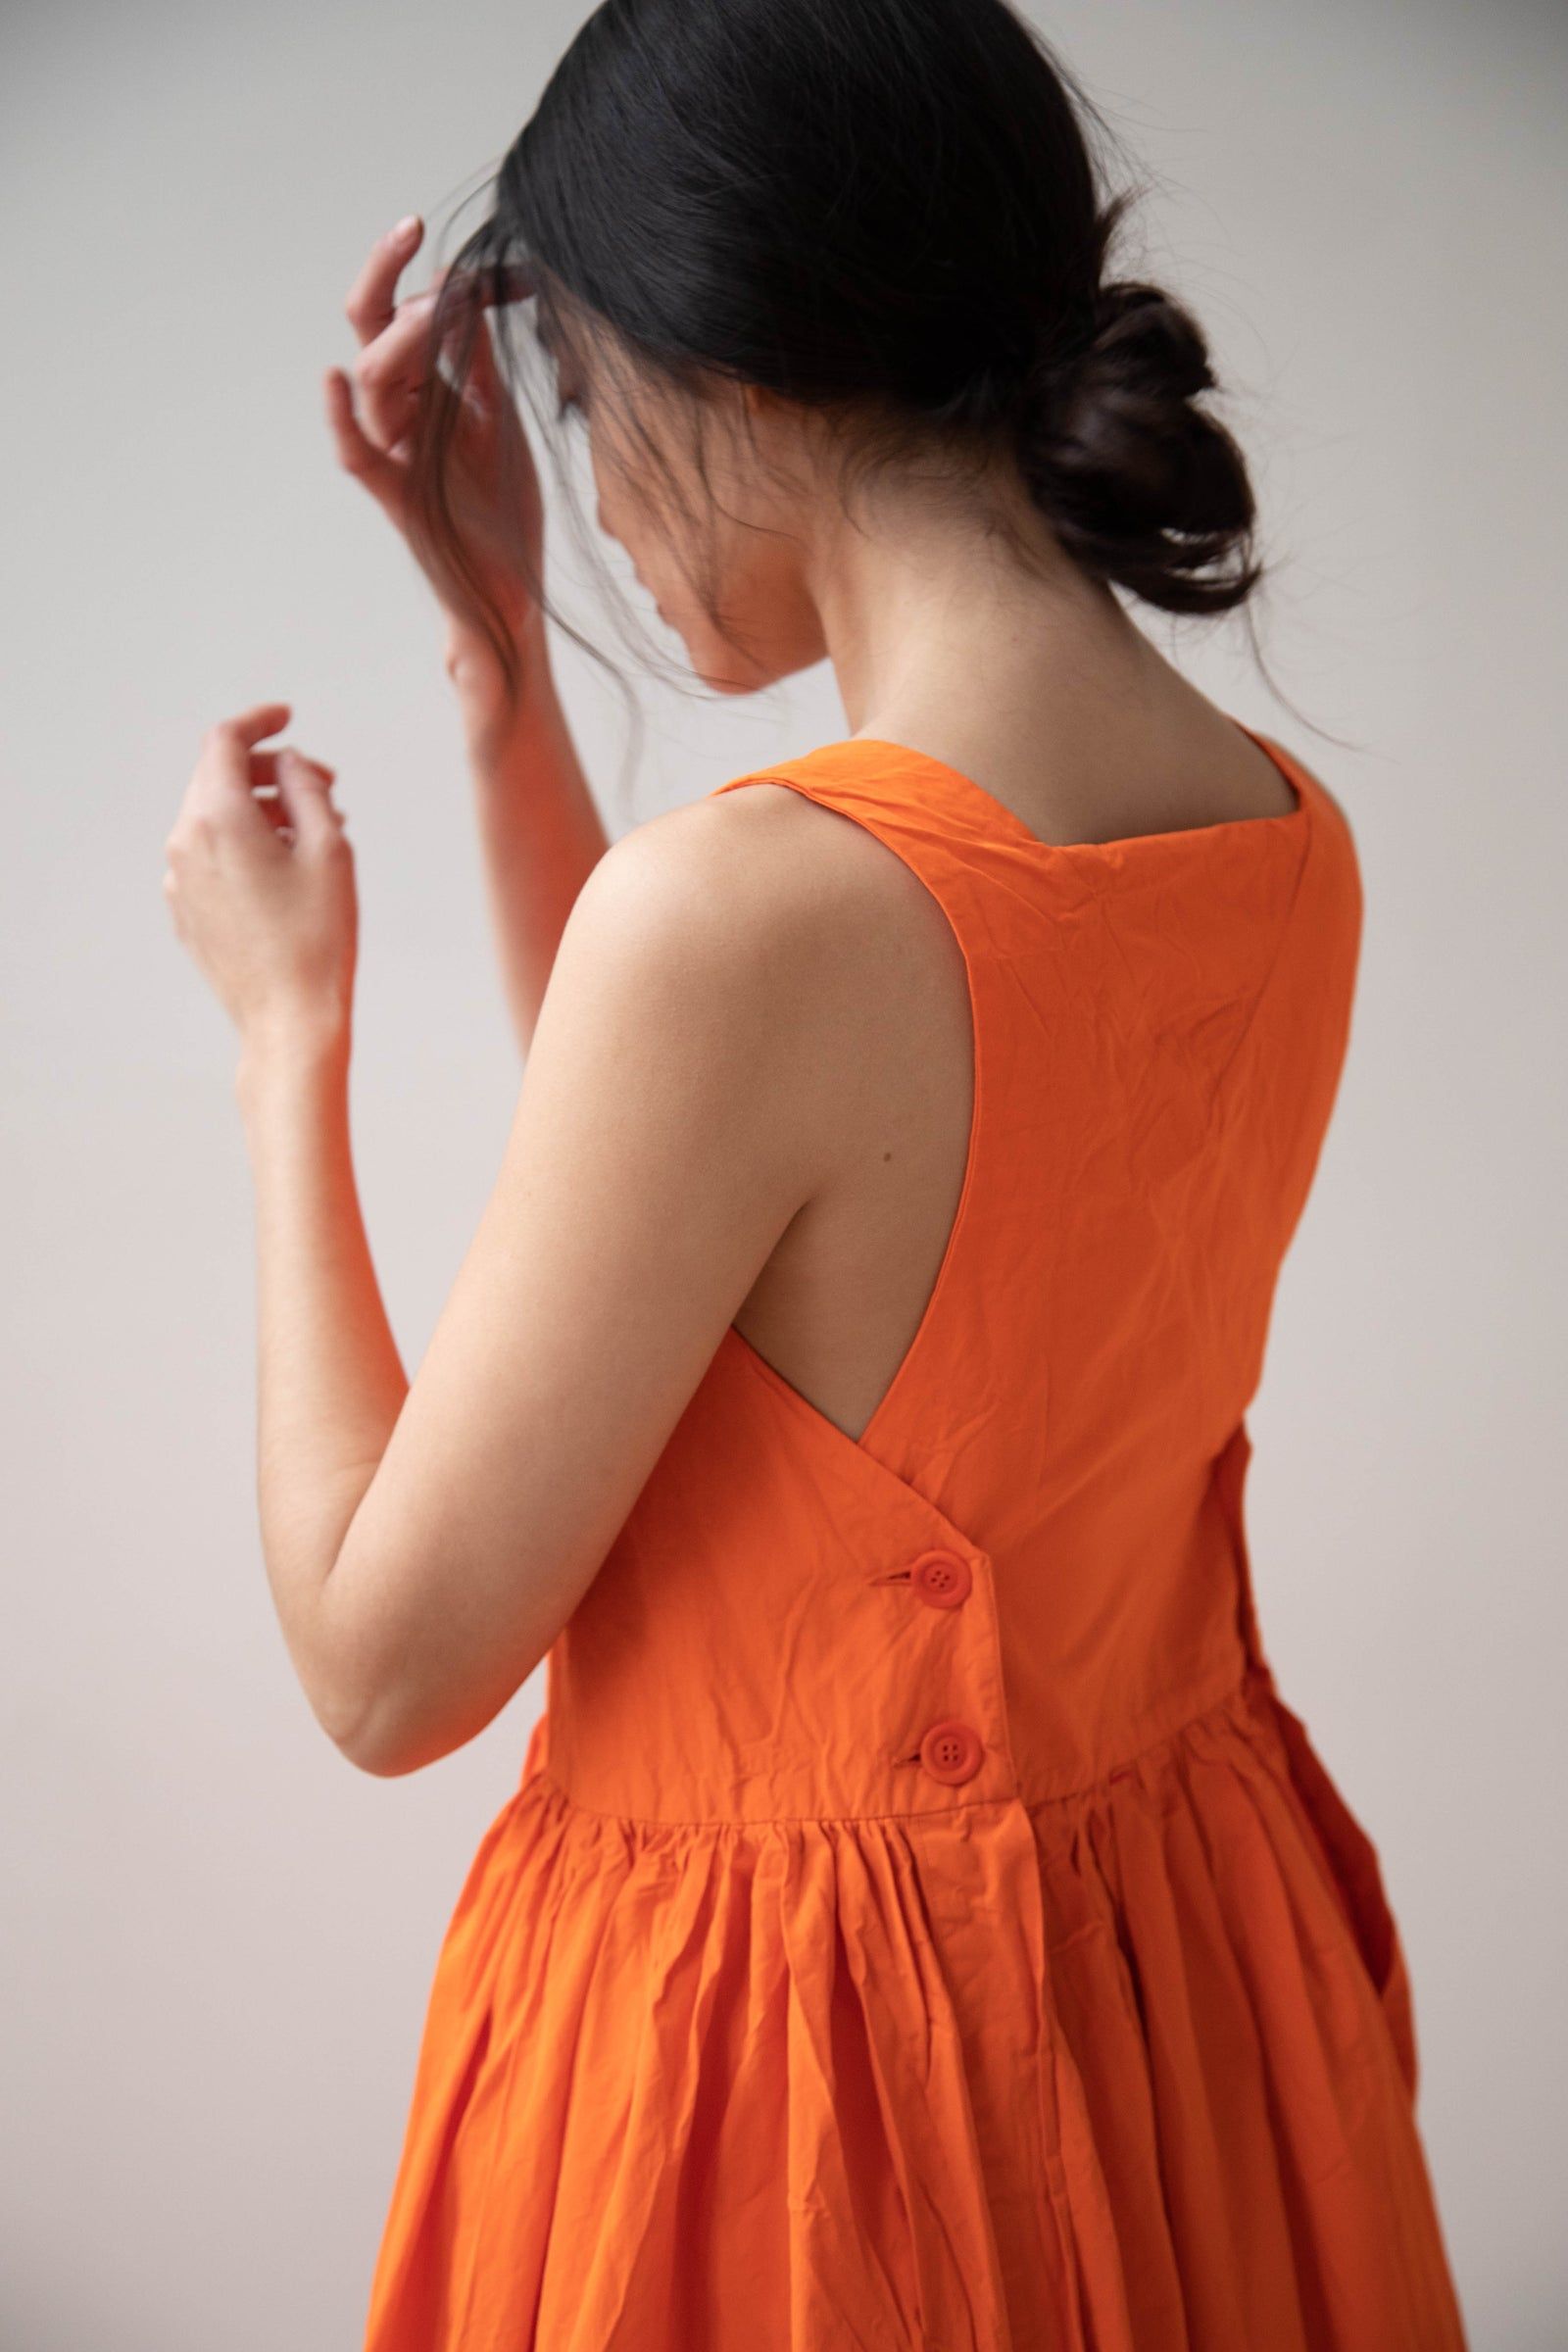 Orange Frocks: Adding Zest to Your Wardrobe